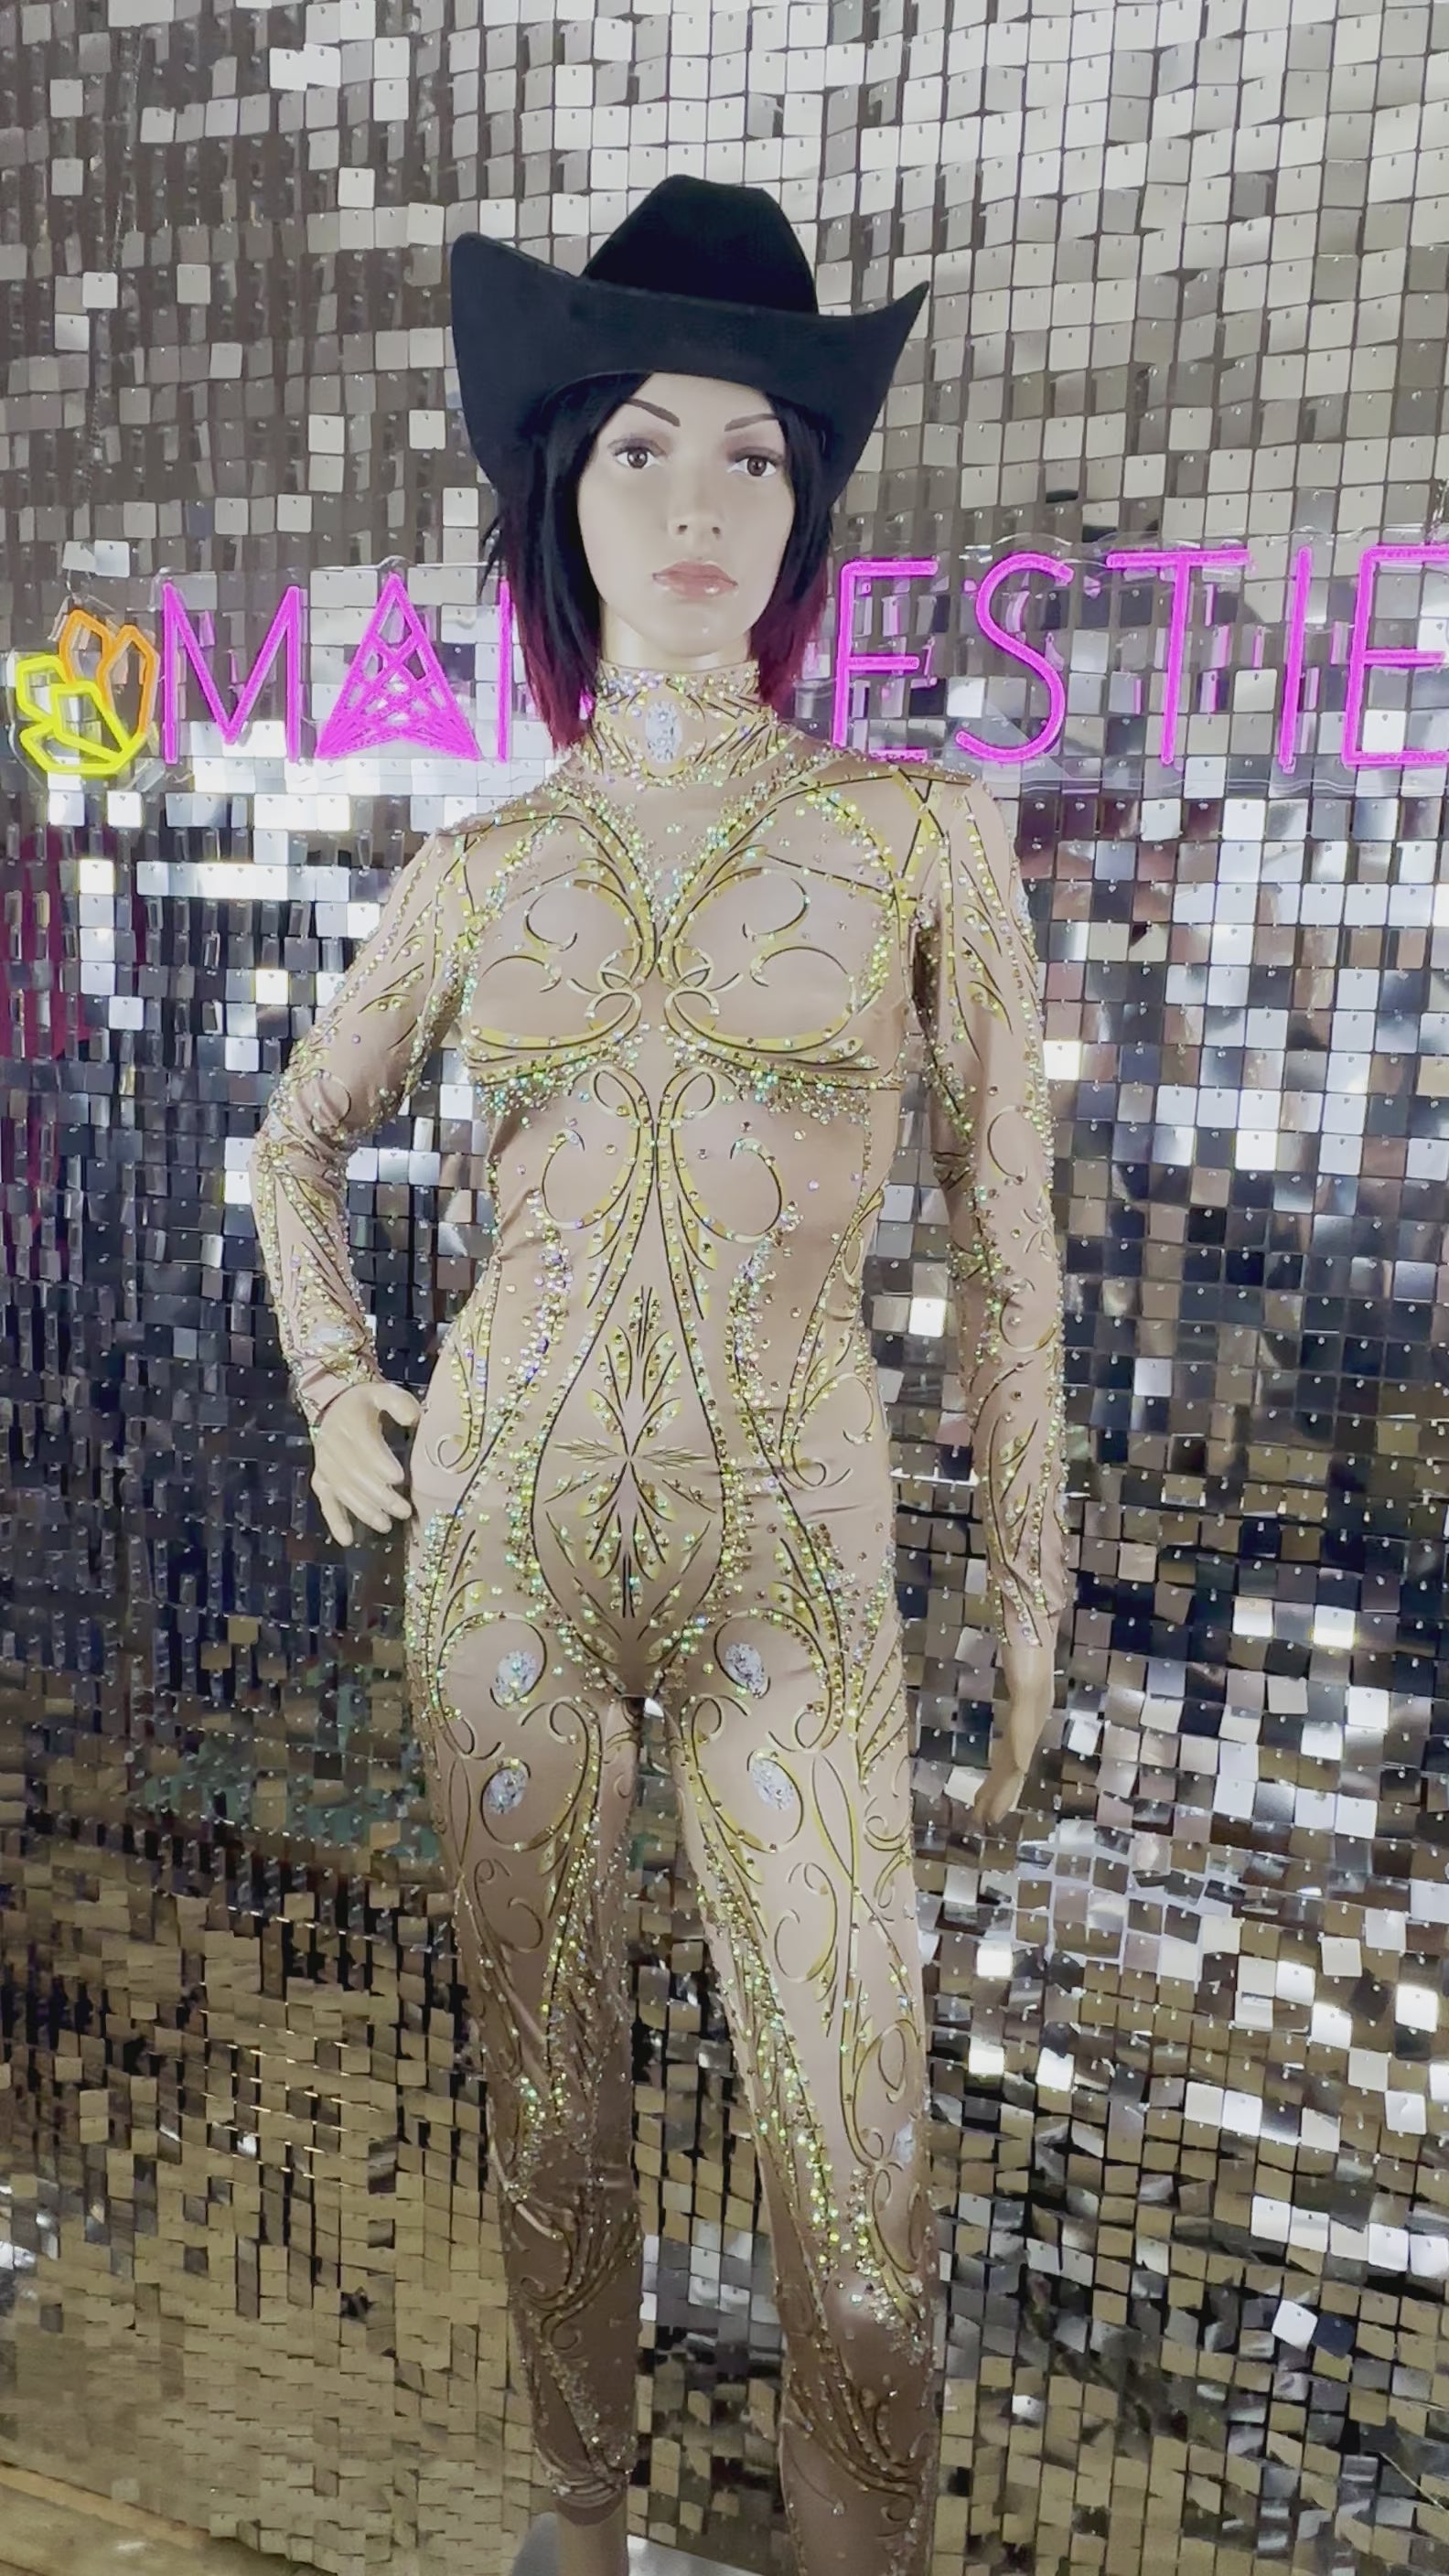 Surya Rhinestone Bodysuit / Beige Diamond Crystal Catsuit / Festival Jumpsuit / Drag / New Years Burning Man / Performer Costume